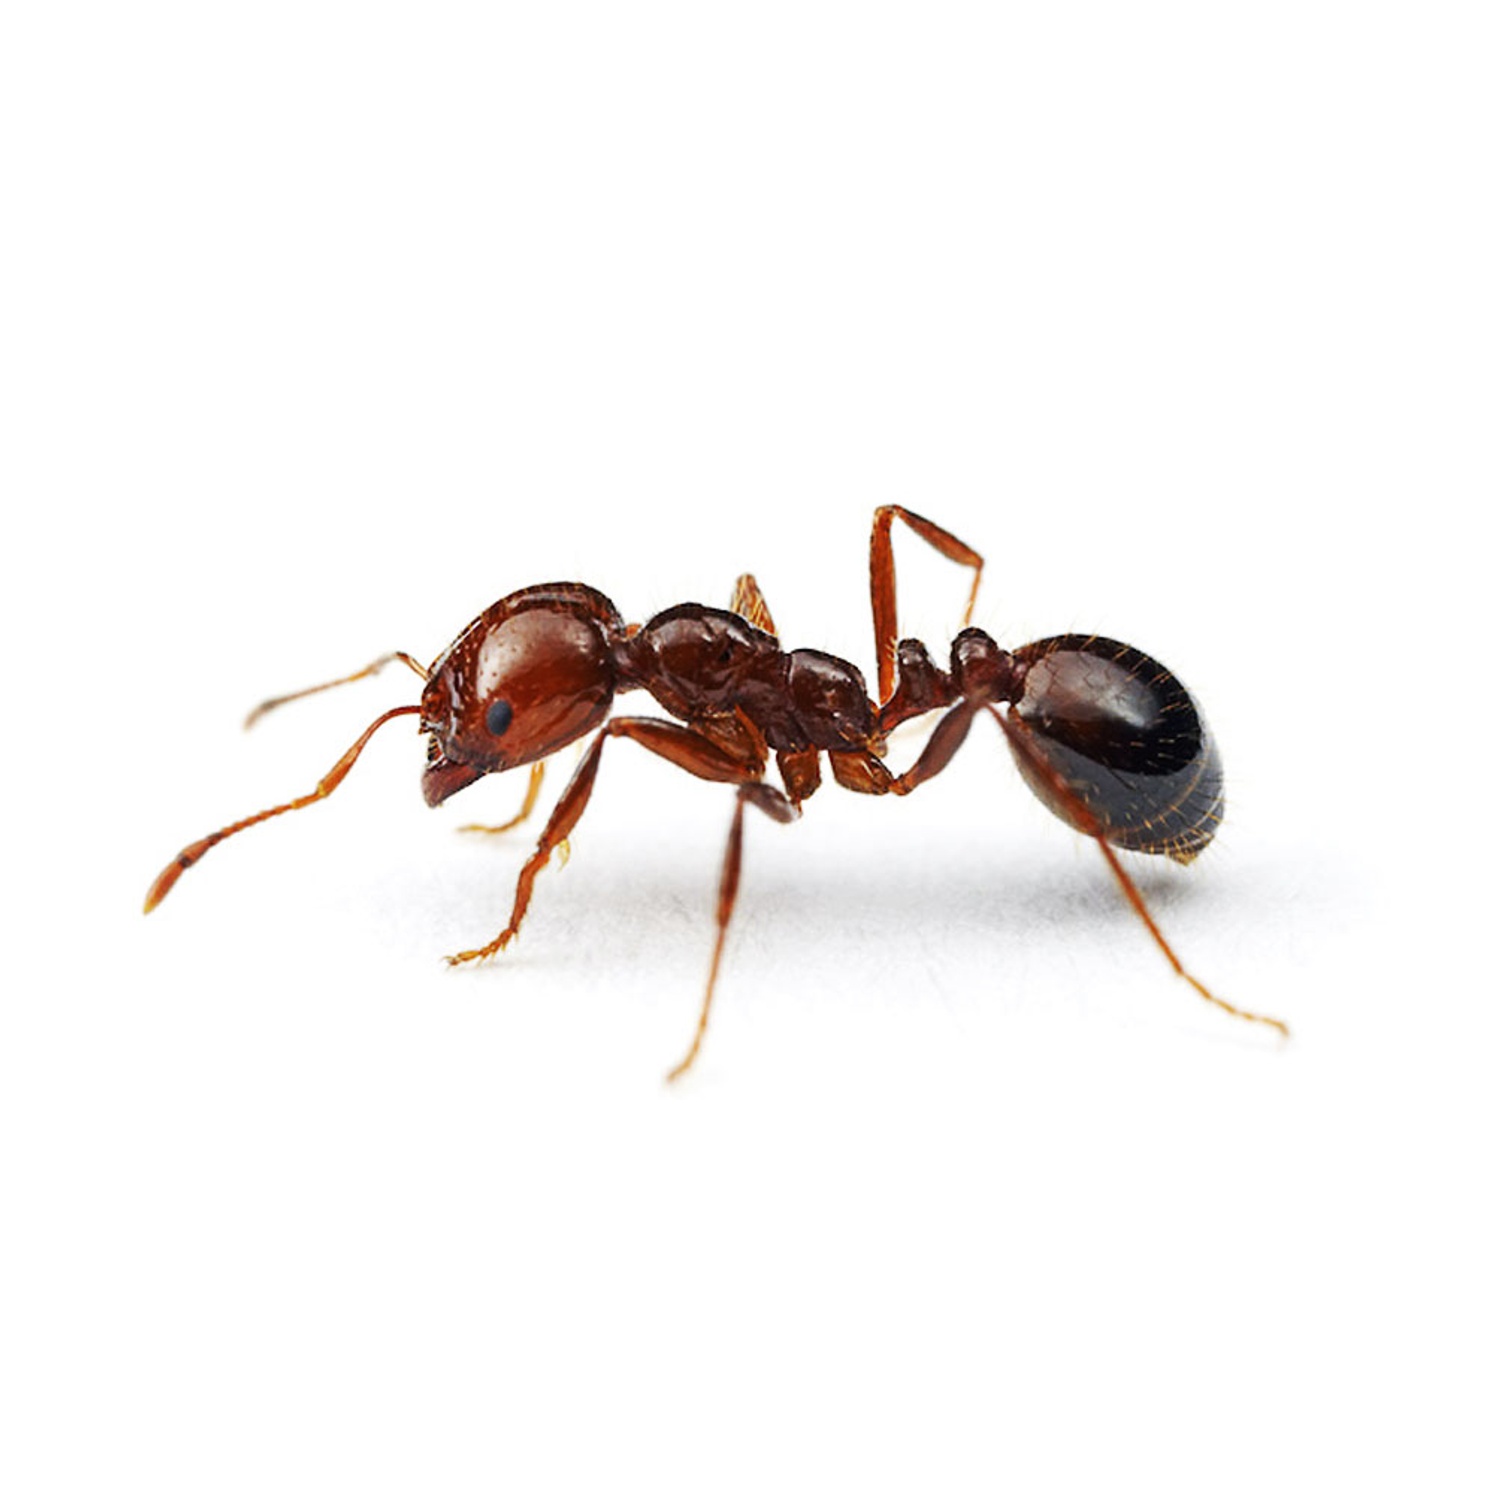 Fire ant environmental analysis laboratory